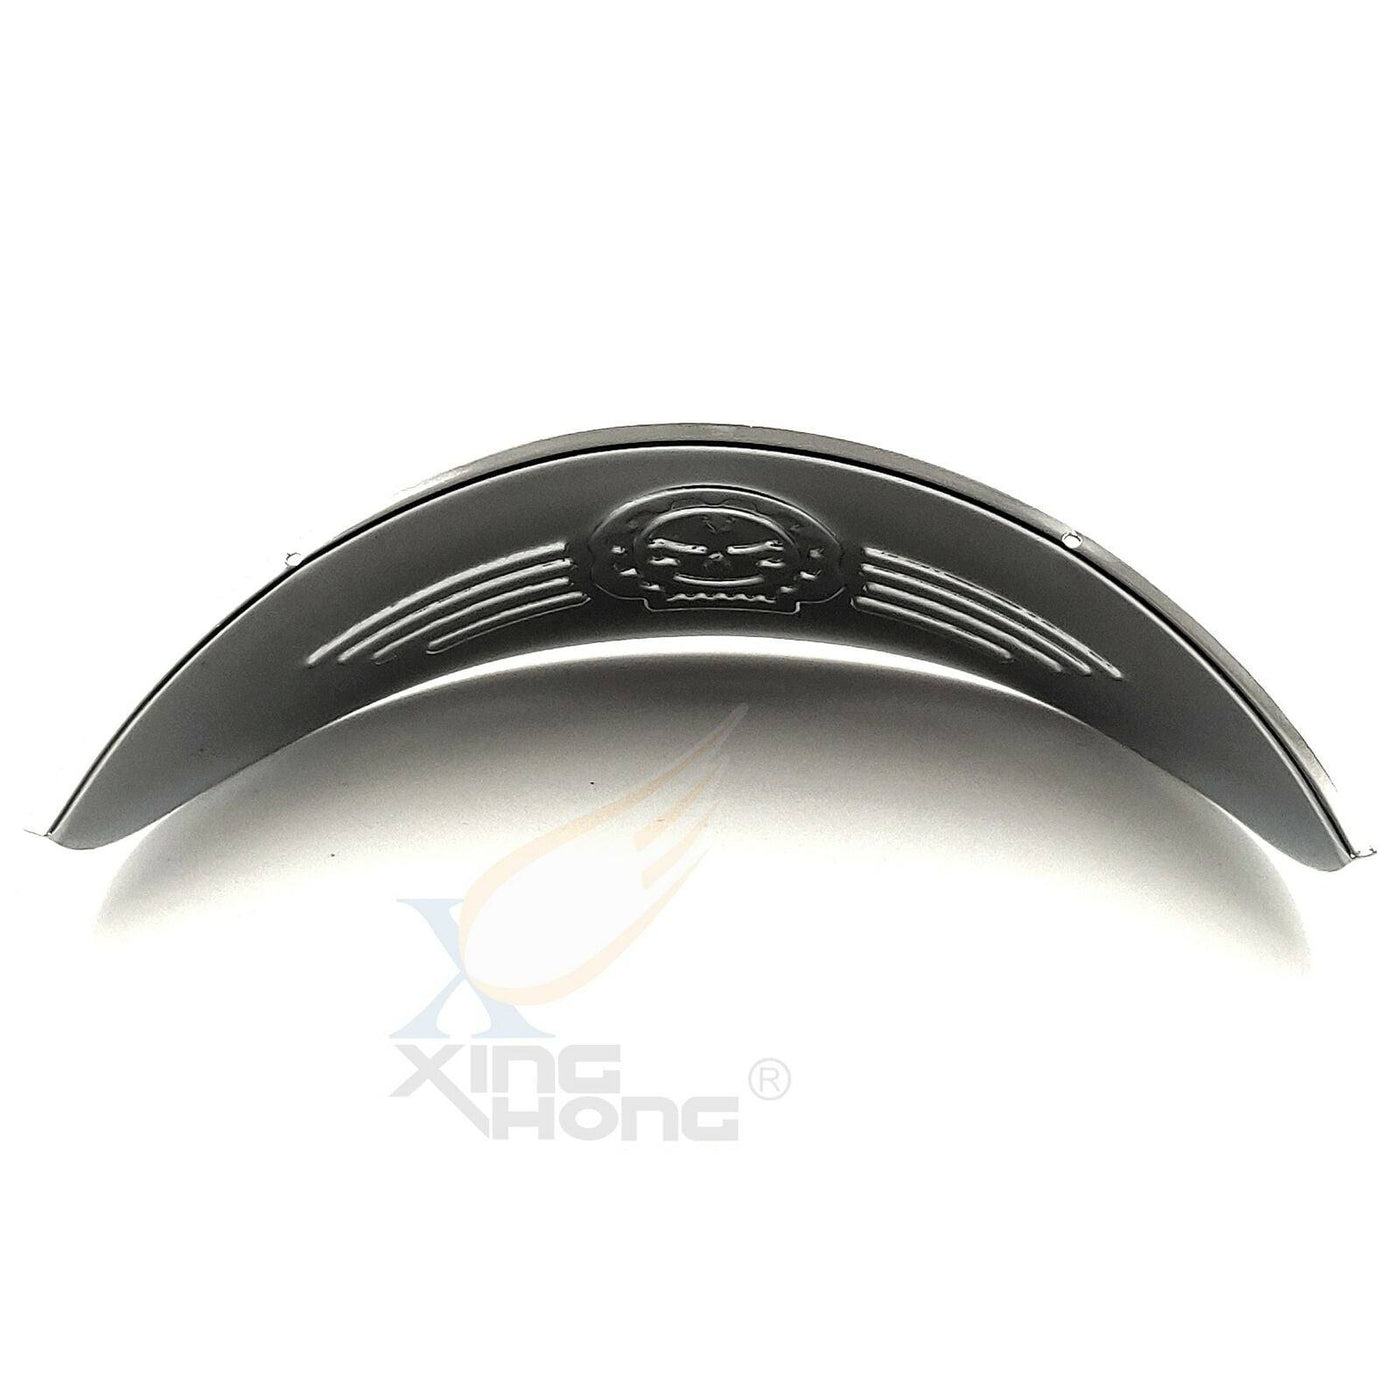 🔥Gear Skull 7" Headlight Visor Heavy Duty Thick For Harley Softail Deluxe FLSTN - Moto Life Products